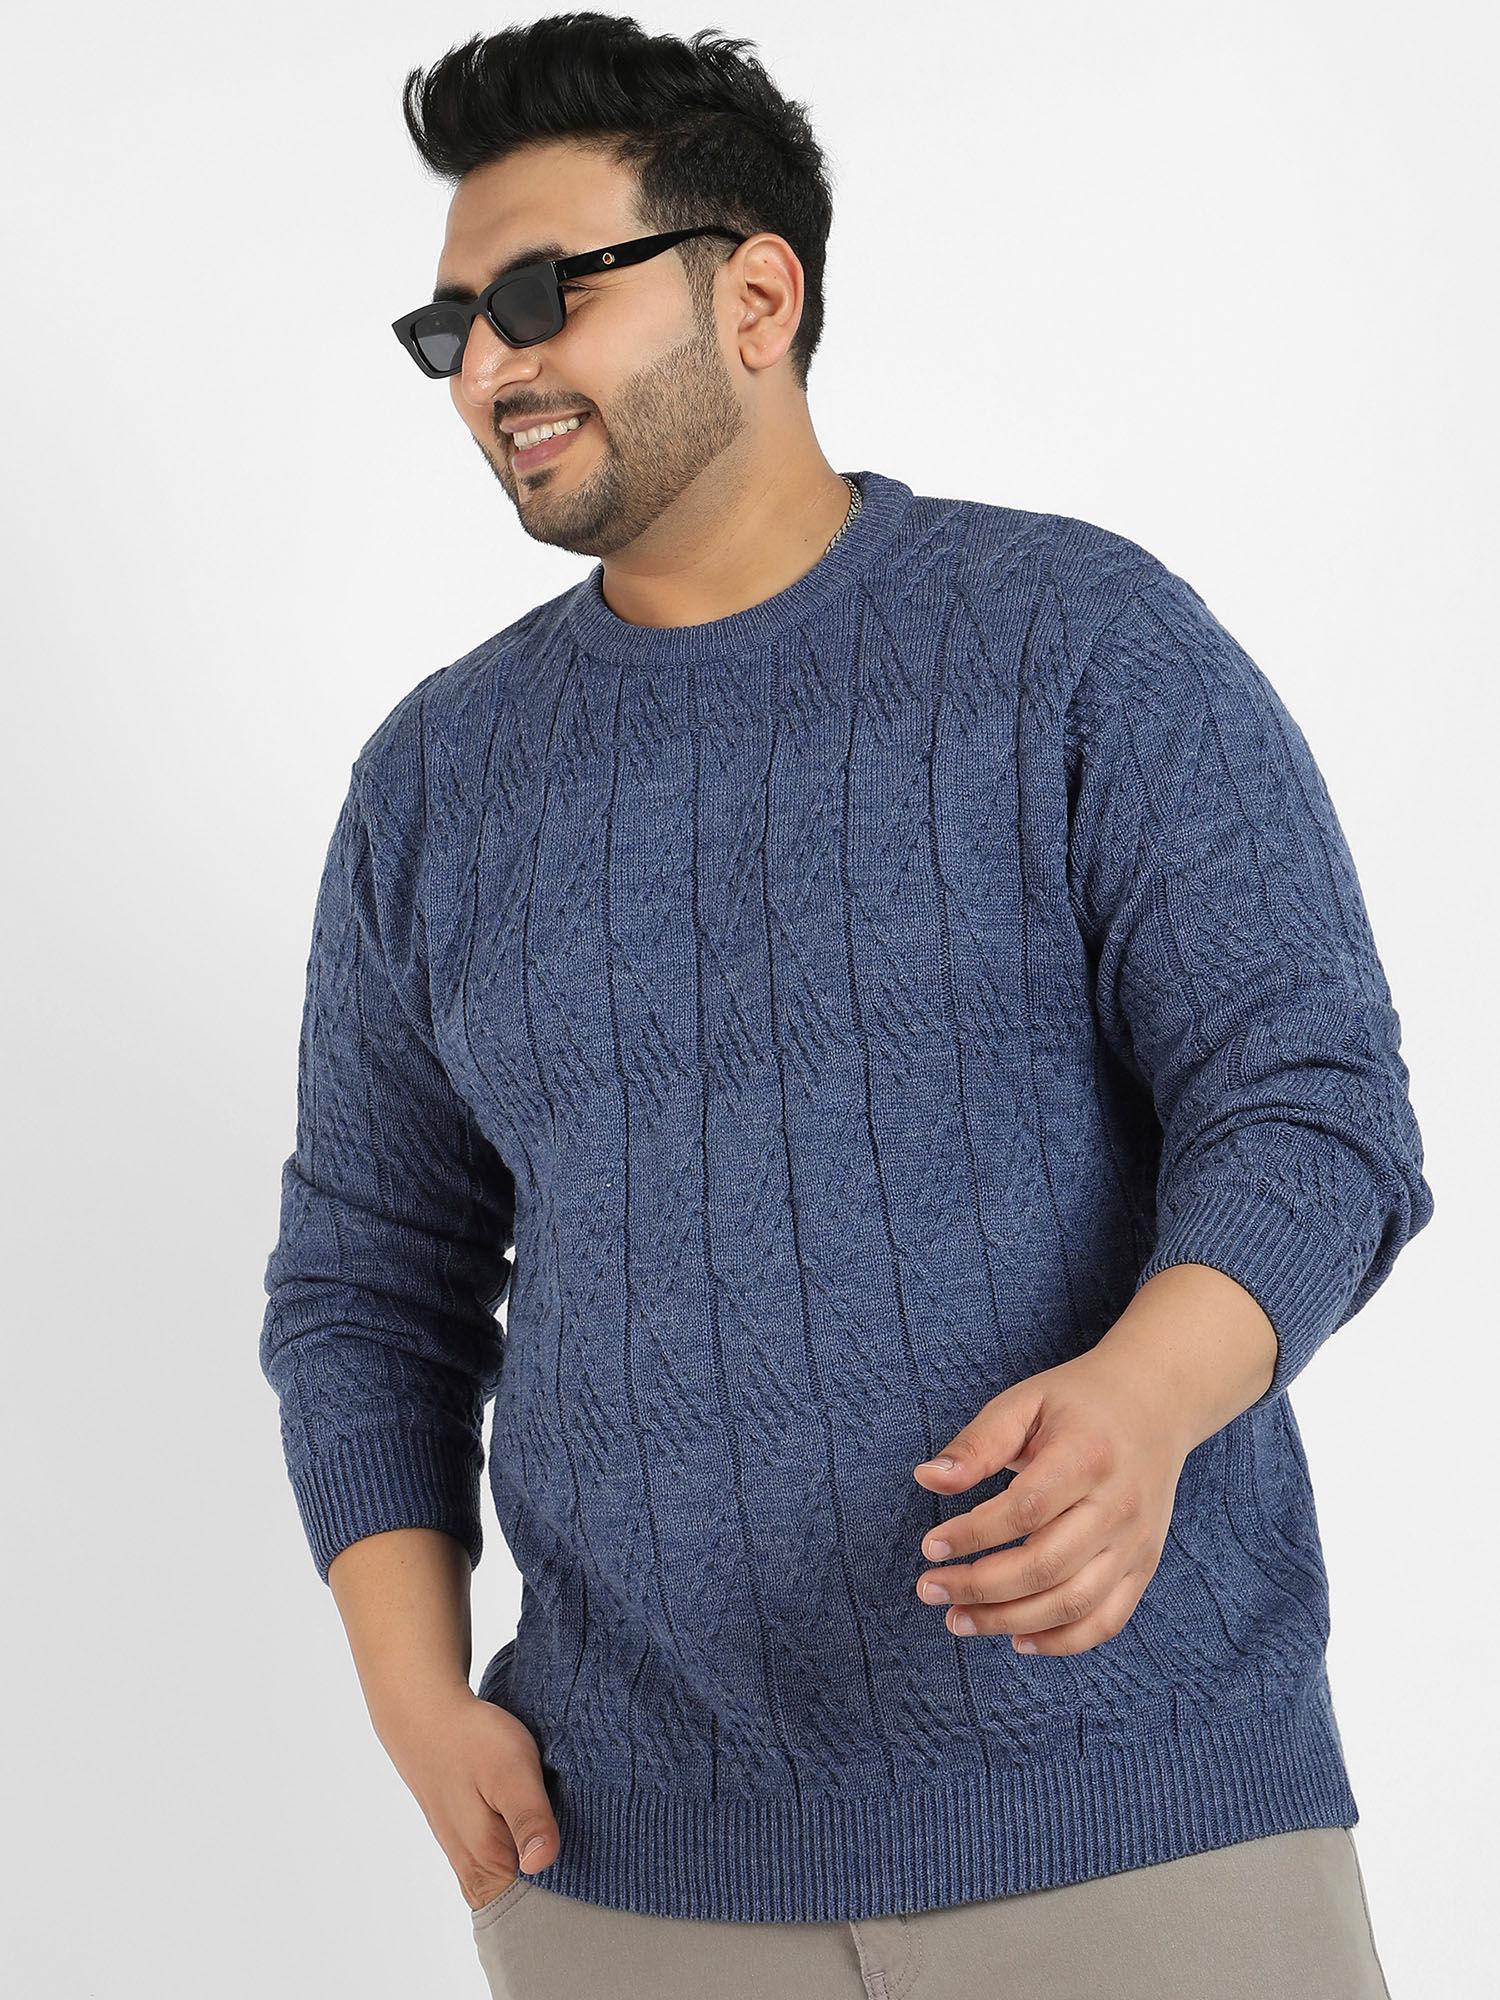 men-navy-blue-textured-knit-pullover-sweater